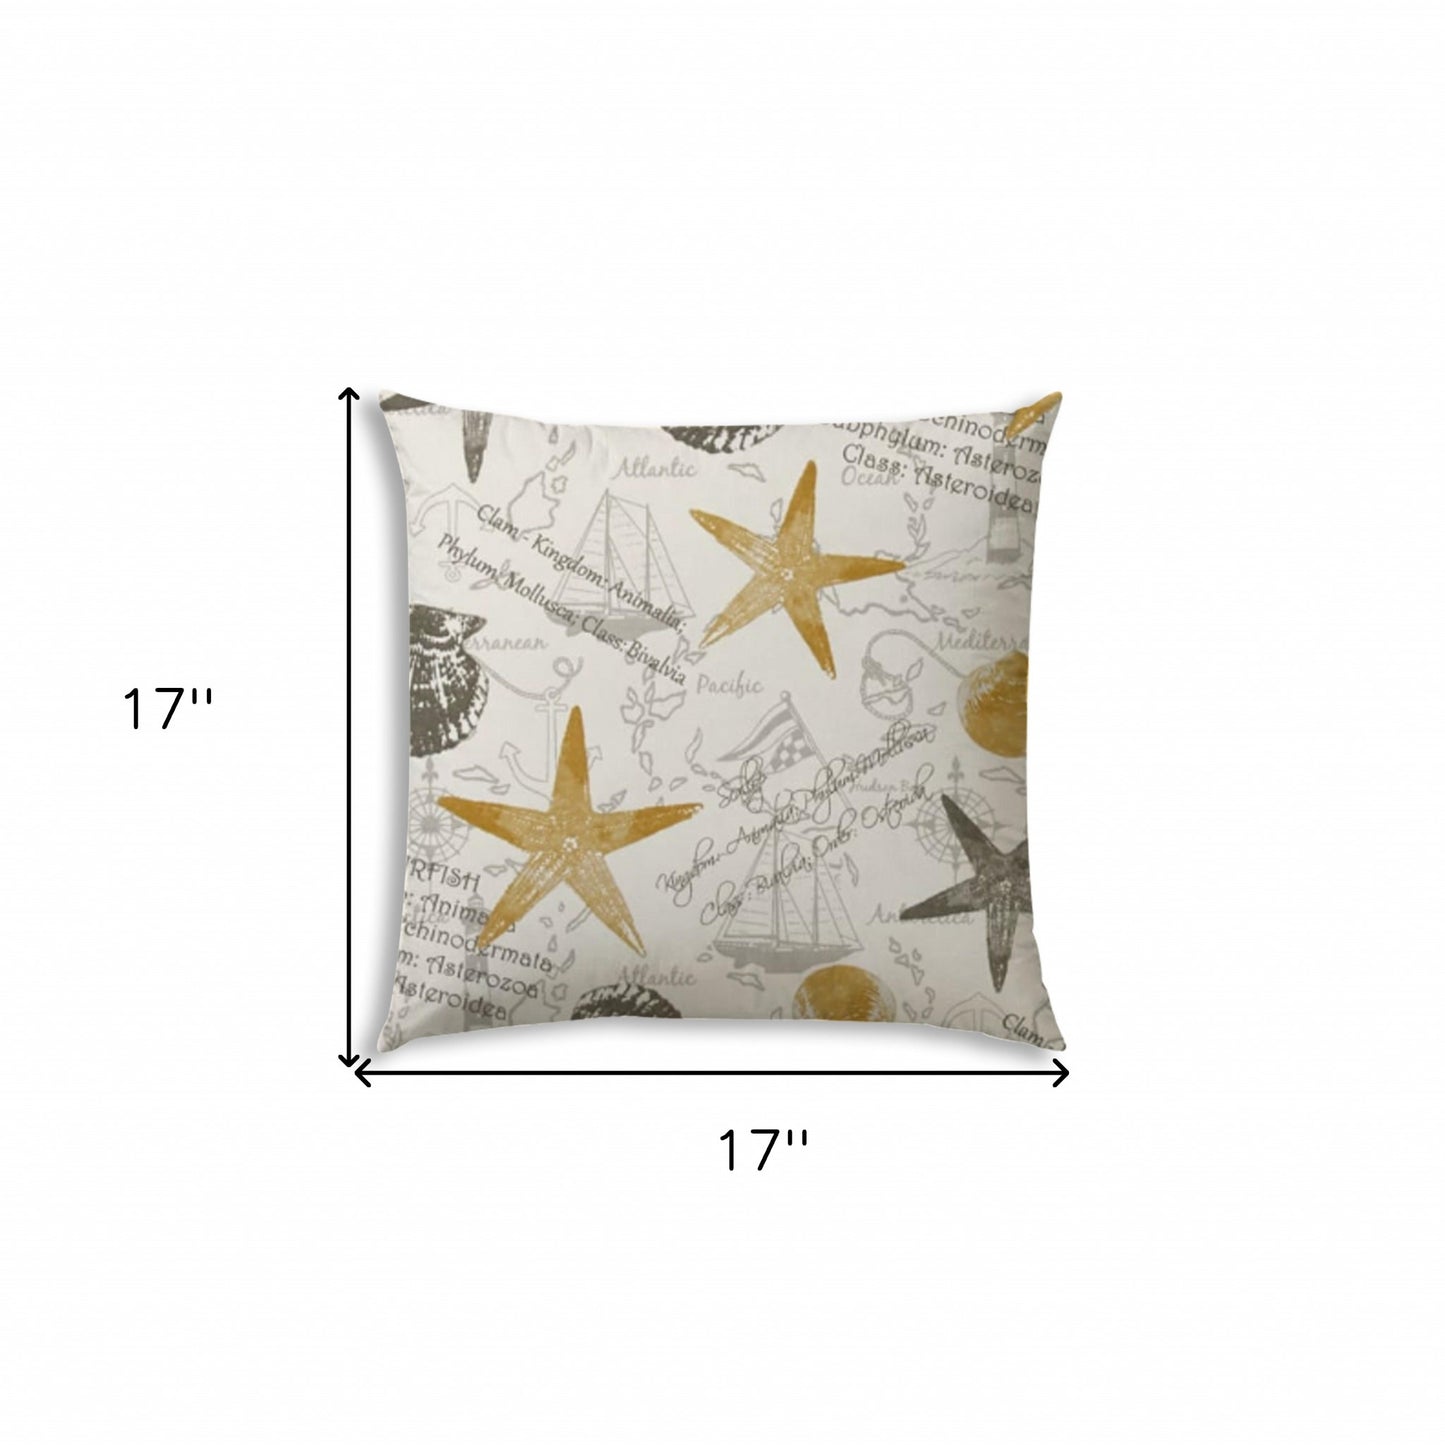 17" Beige and Gold Starfish Coastal Indoor Outdoor Throw Pillow